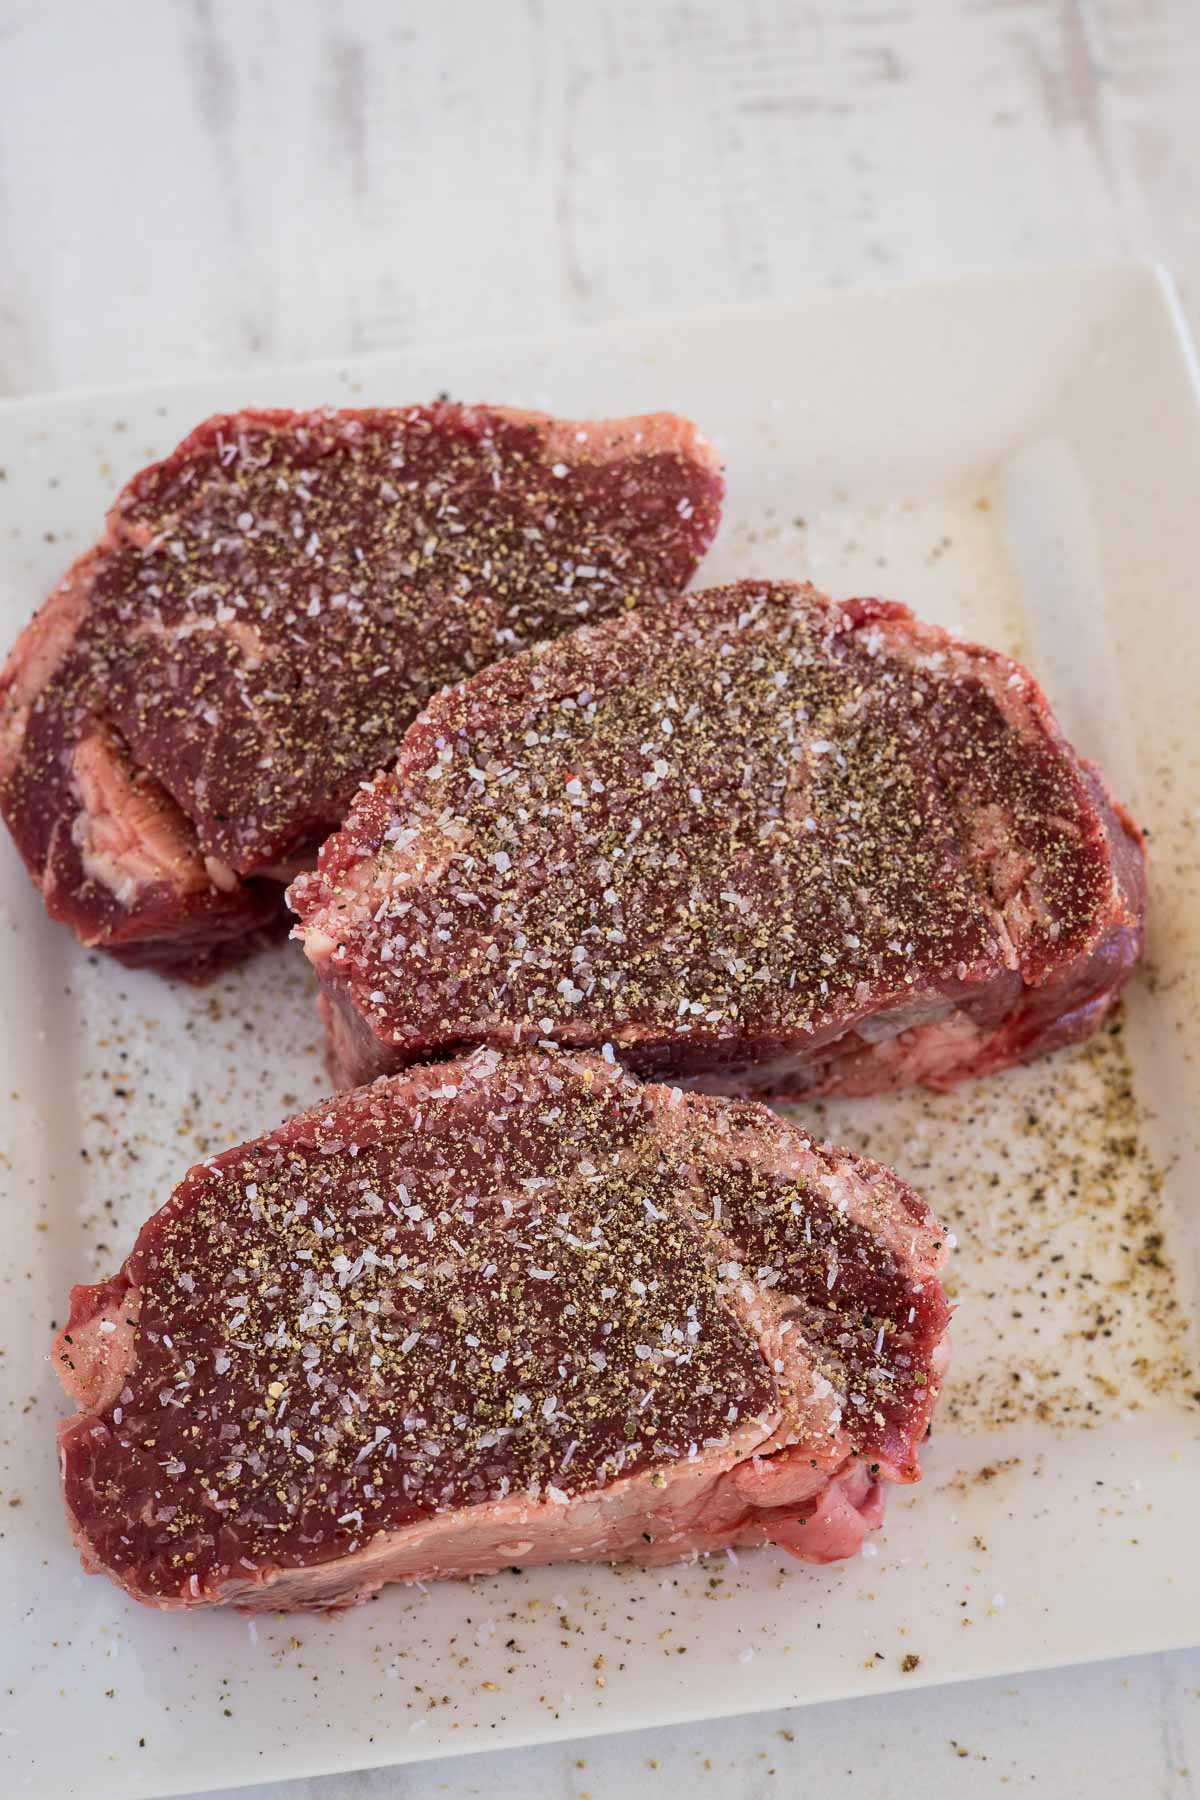 Raw tenderloin steaks seasoned with salt and pepper.